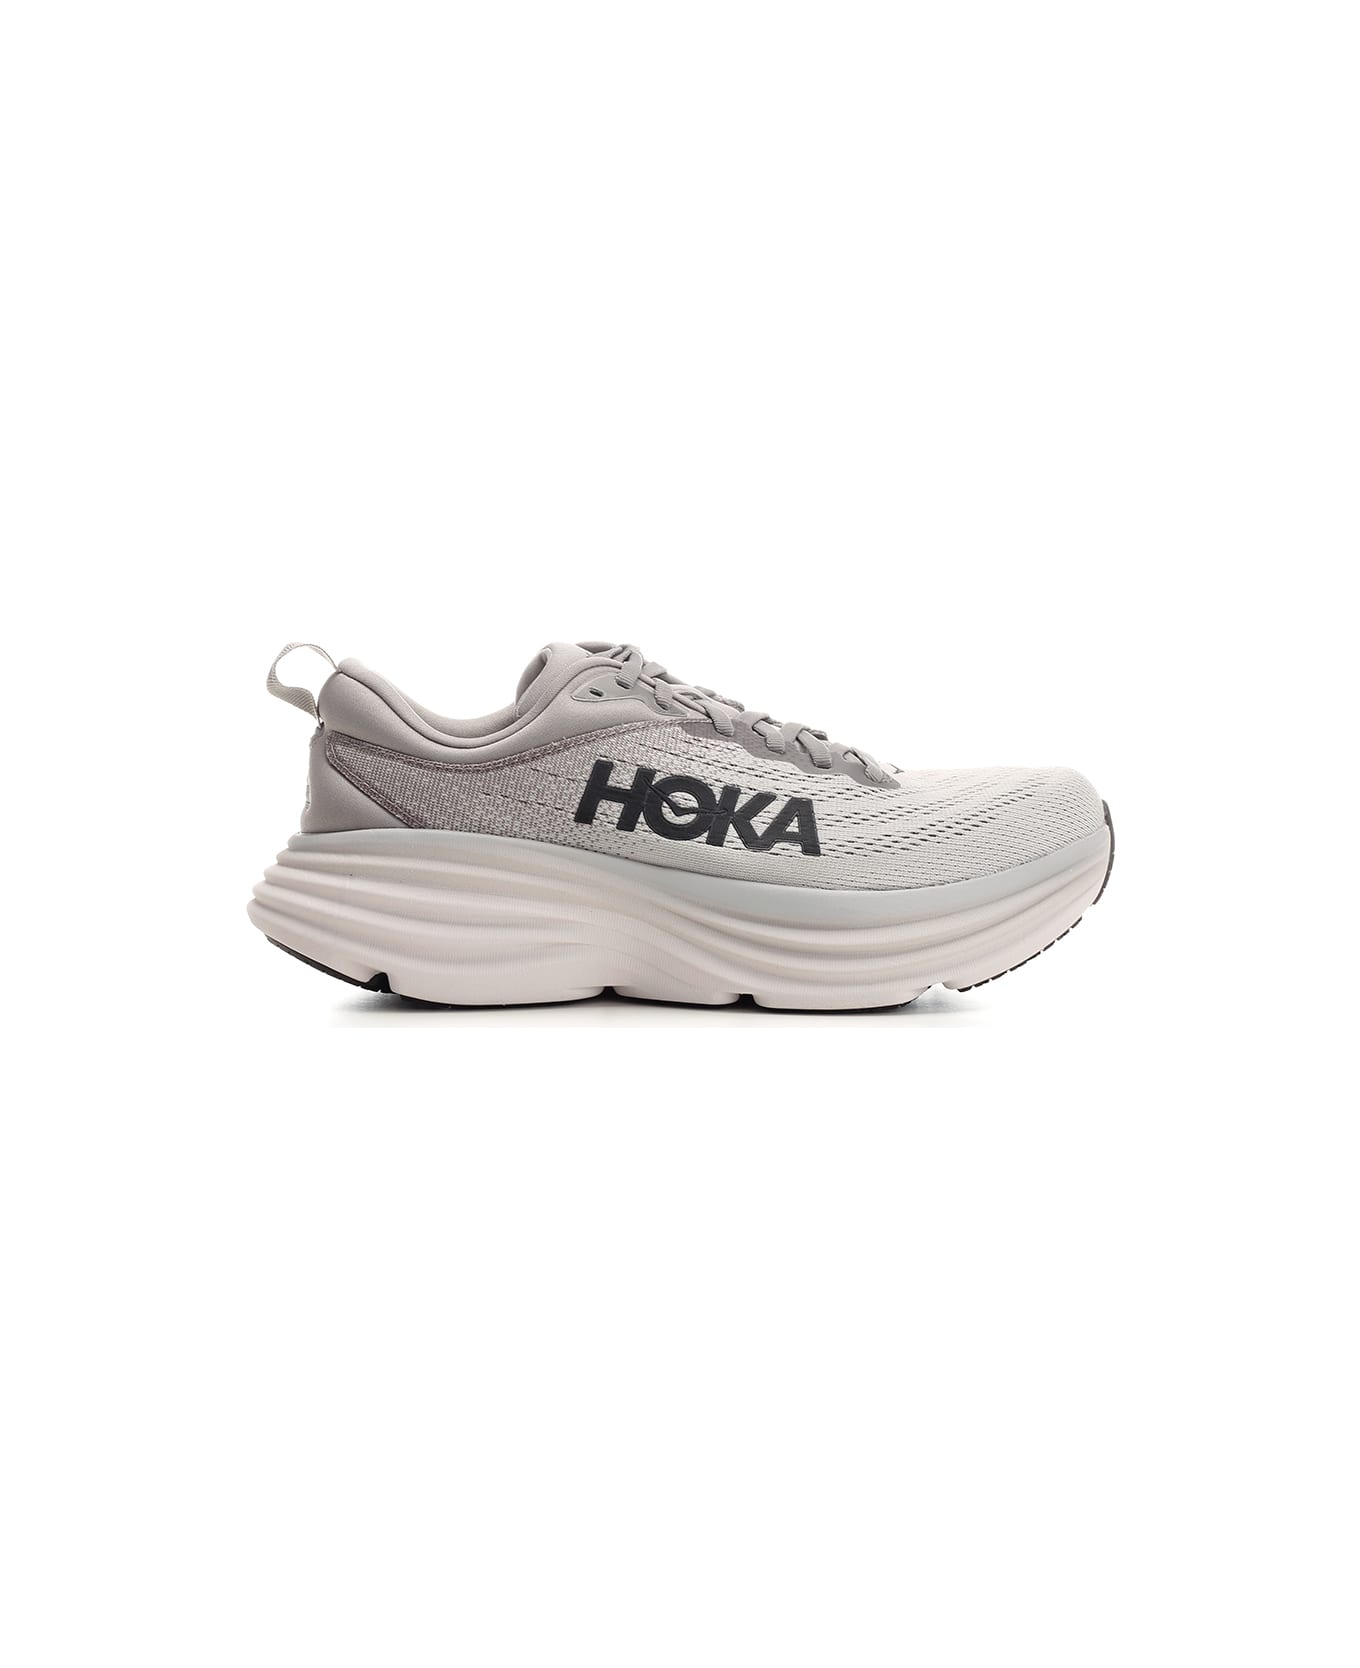 Hoka "bondi" Sneakers - Grey